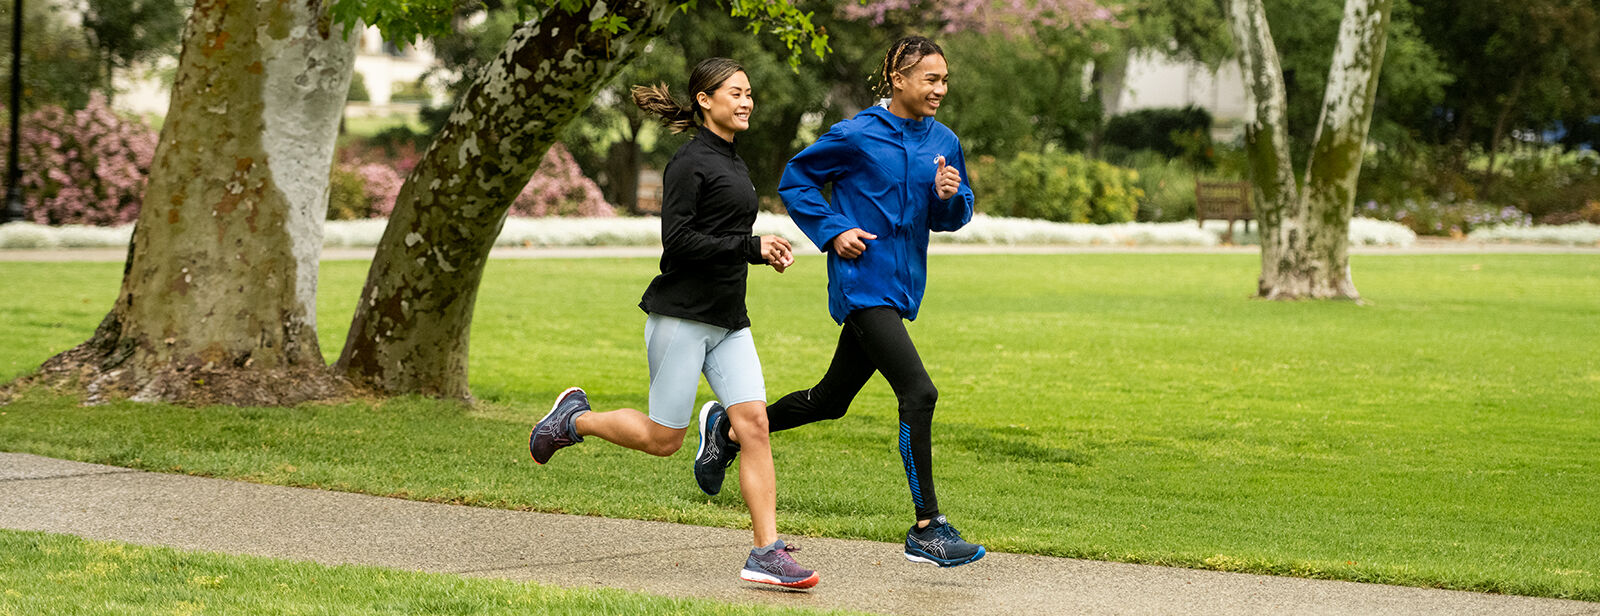 Health Benefits of Running and Jogging | ASICS | ASICS